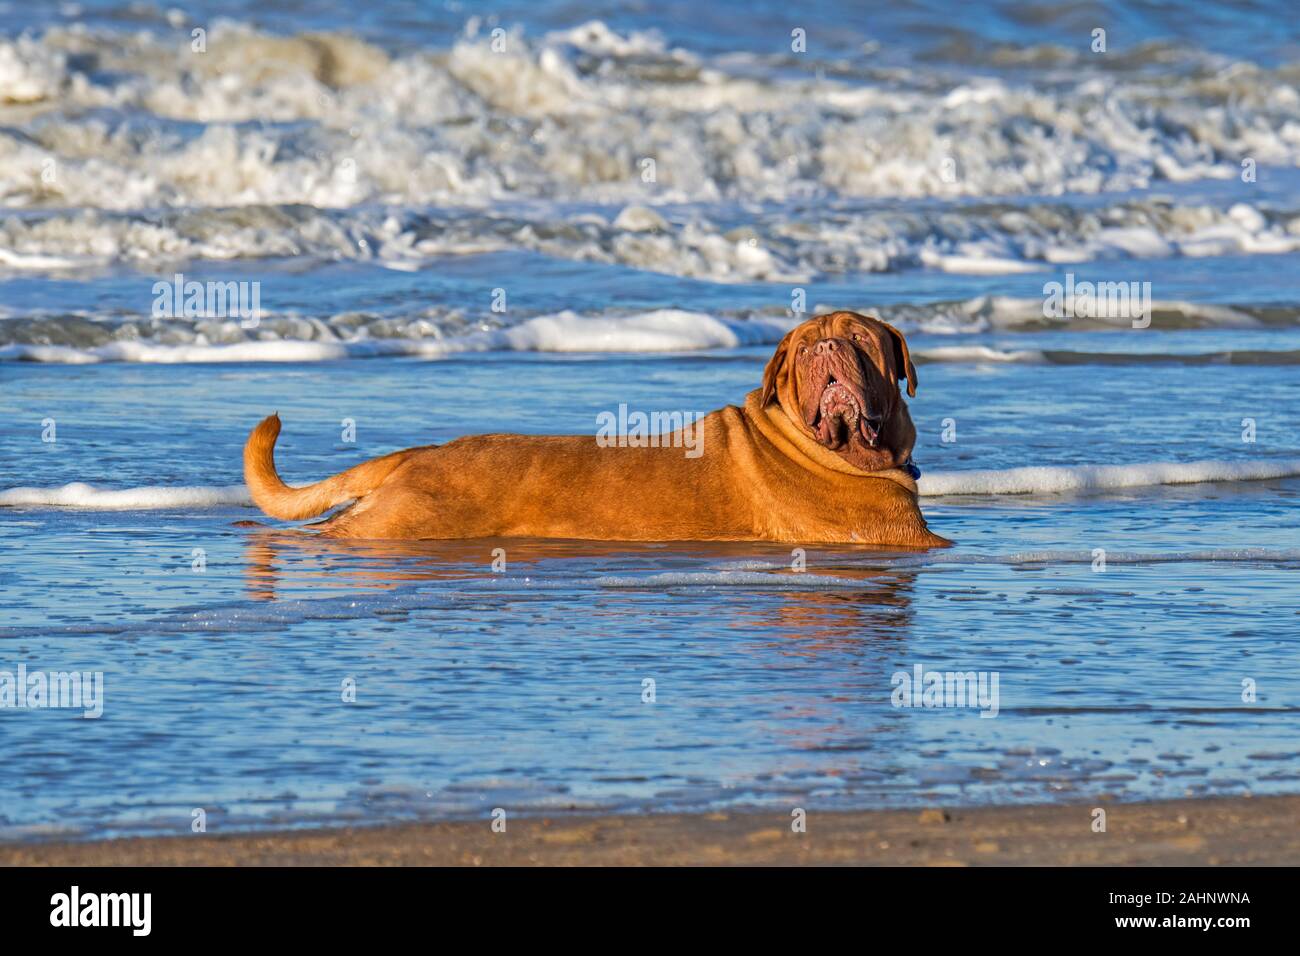 Unleashed Dogue de Bordeaux/Bordeauxdogge/Bordeauxdog, Hund Abkühlung im Meer Wasser gestreckt am Strand Stockfoto